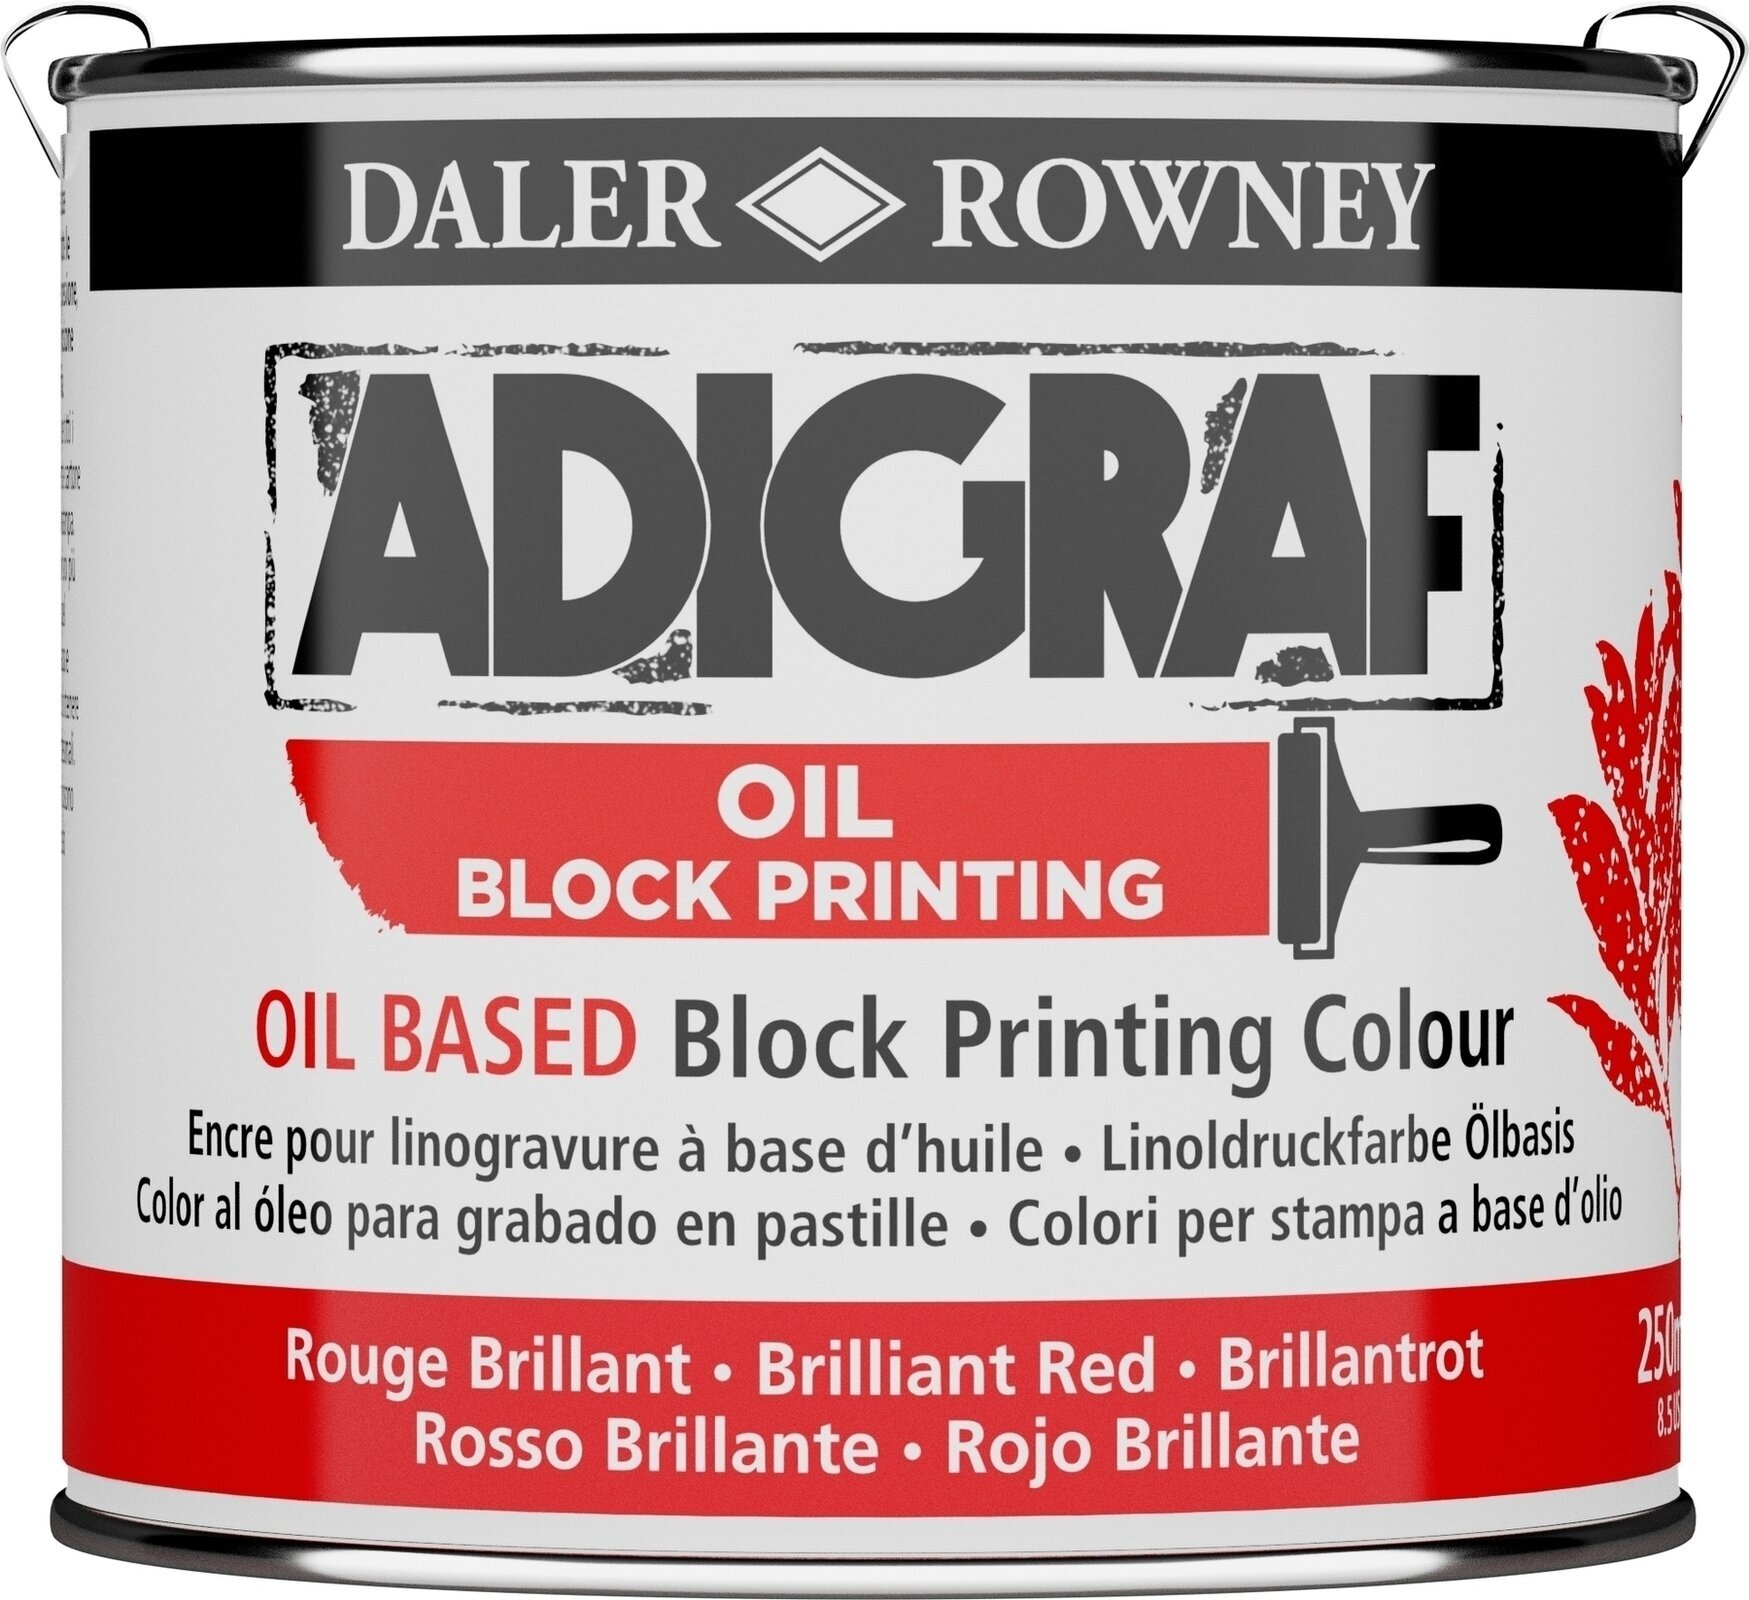 Pintura para linograbado Daler Rowney Adigraf Block Printing Oil Pintura para linograbado Brilliant Red 250 ml